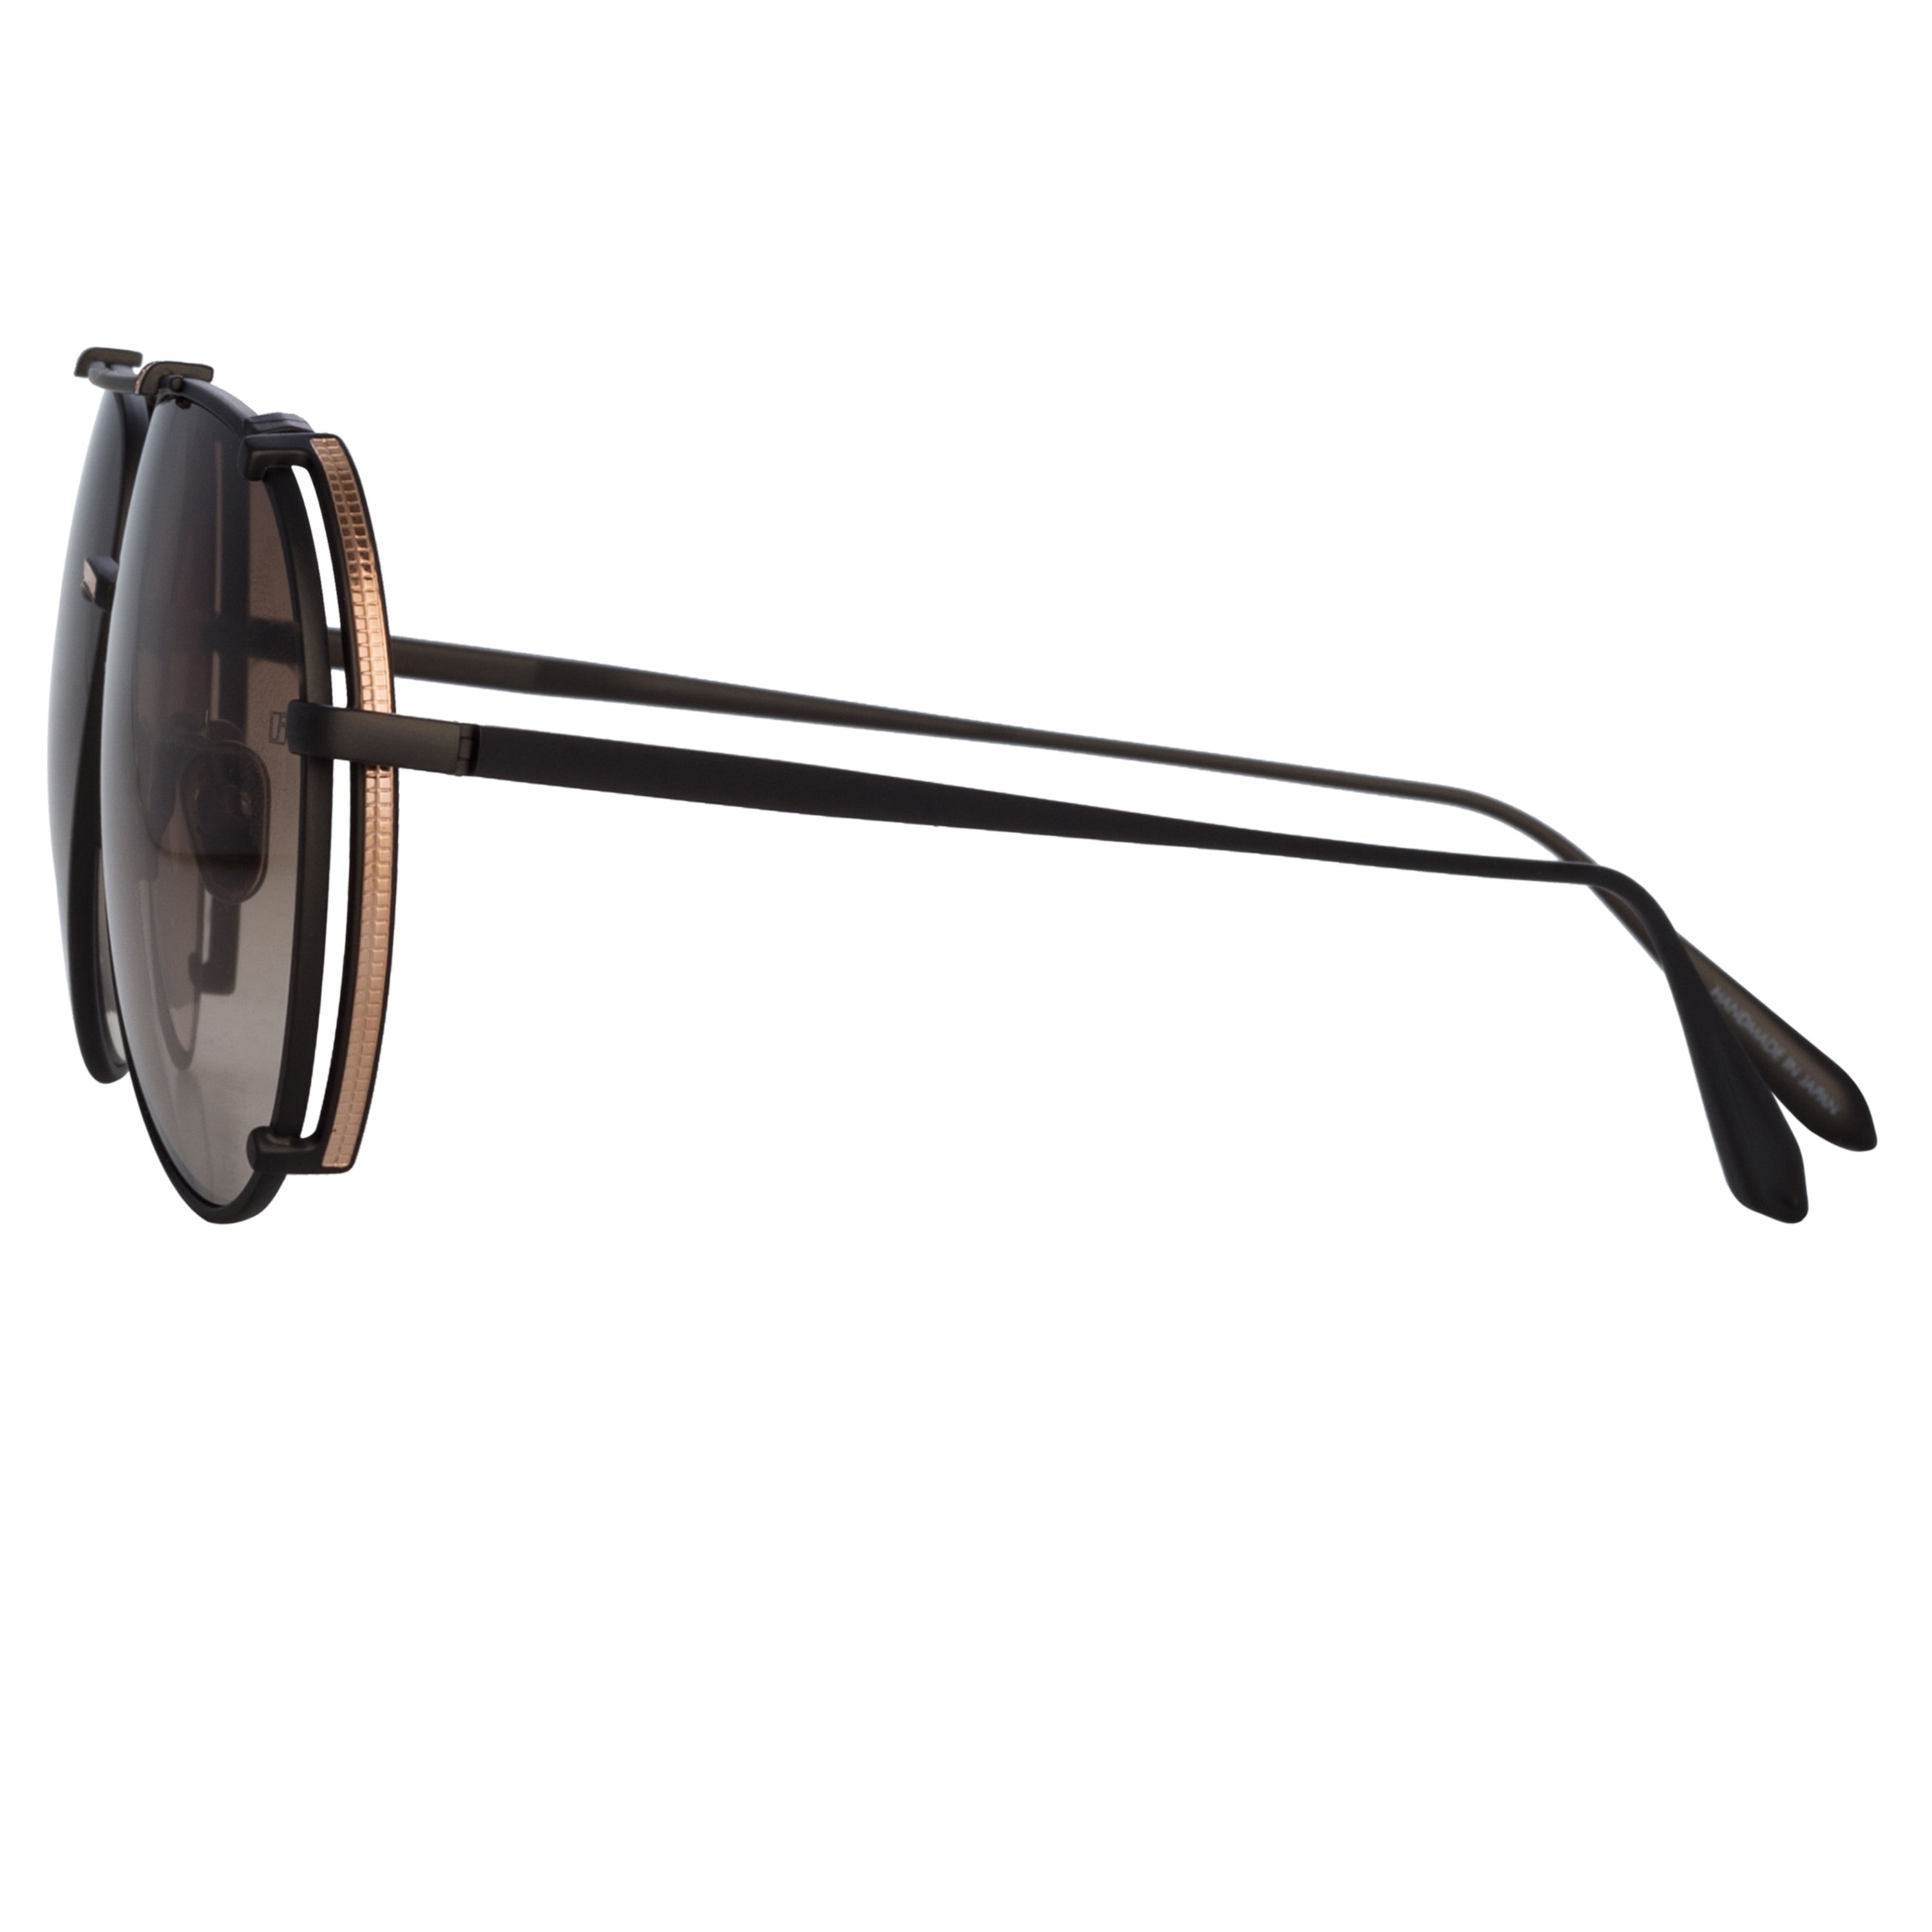 Sunglasses chasma For Men & Women, UV Protection Wayfarer, Others Aviator  sunglasses ( black)